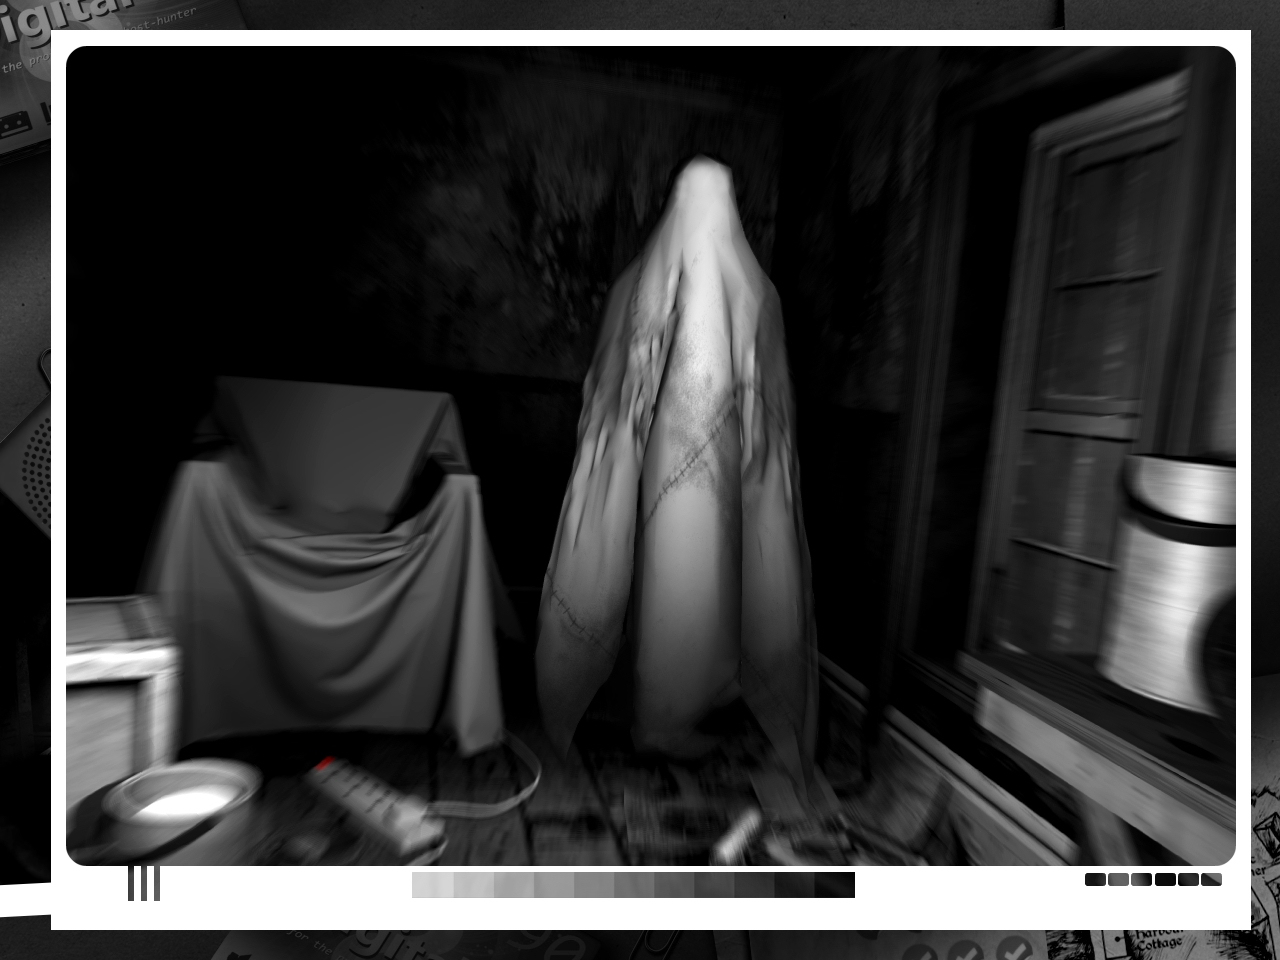 The Last Crown: Midnight Horror screenshot